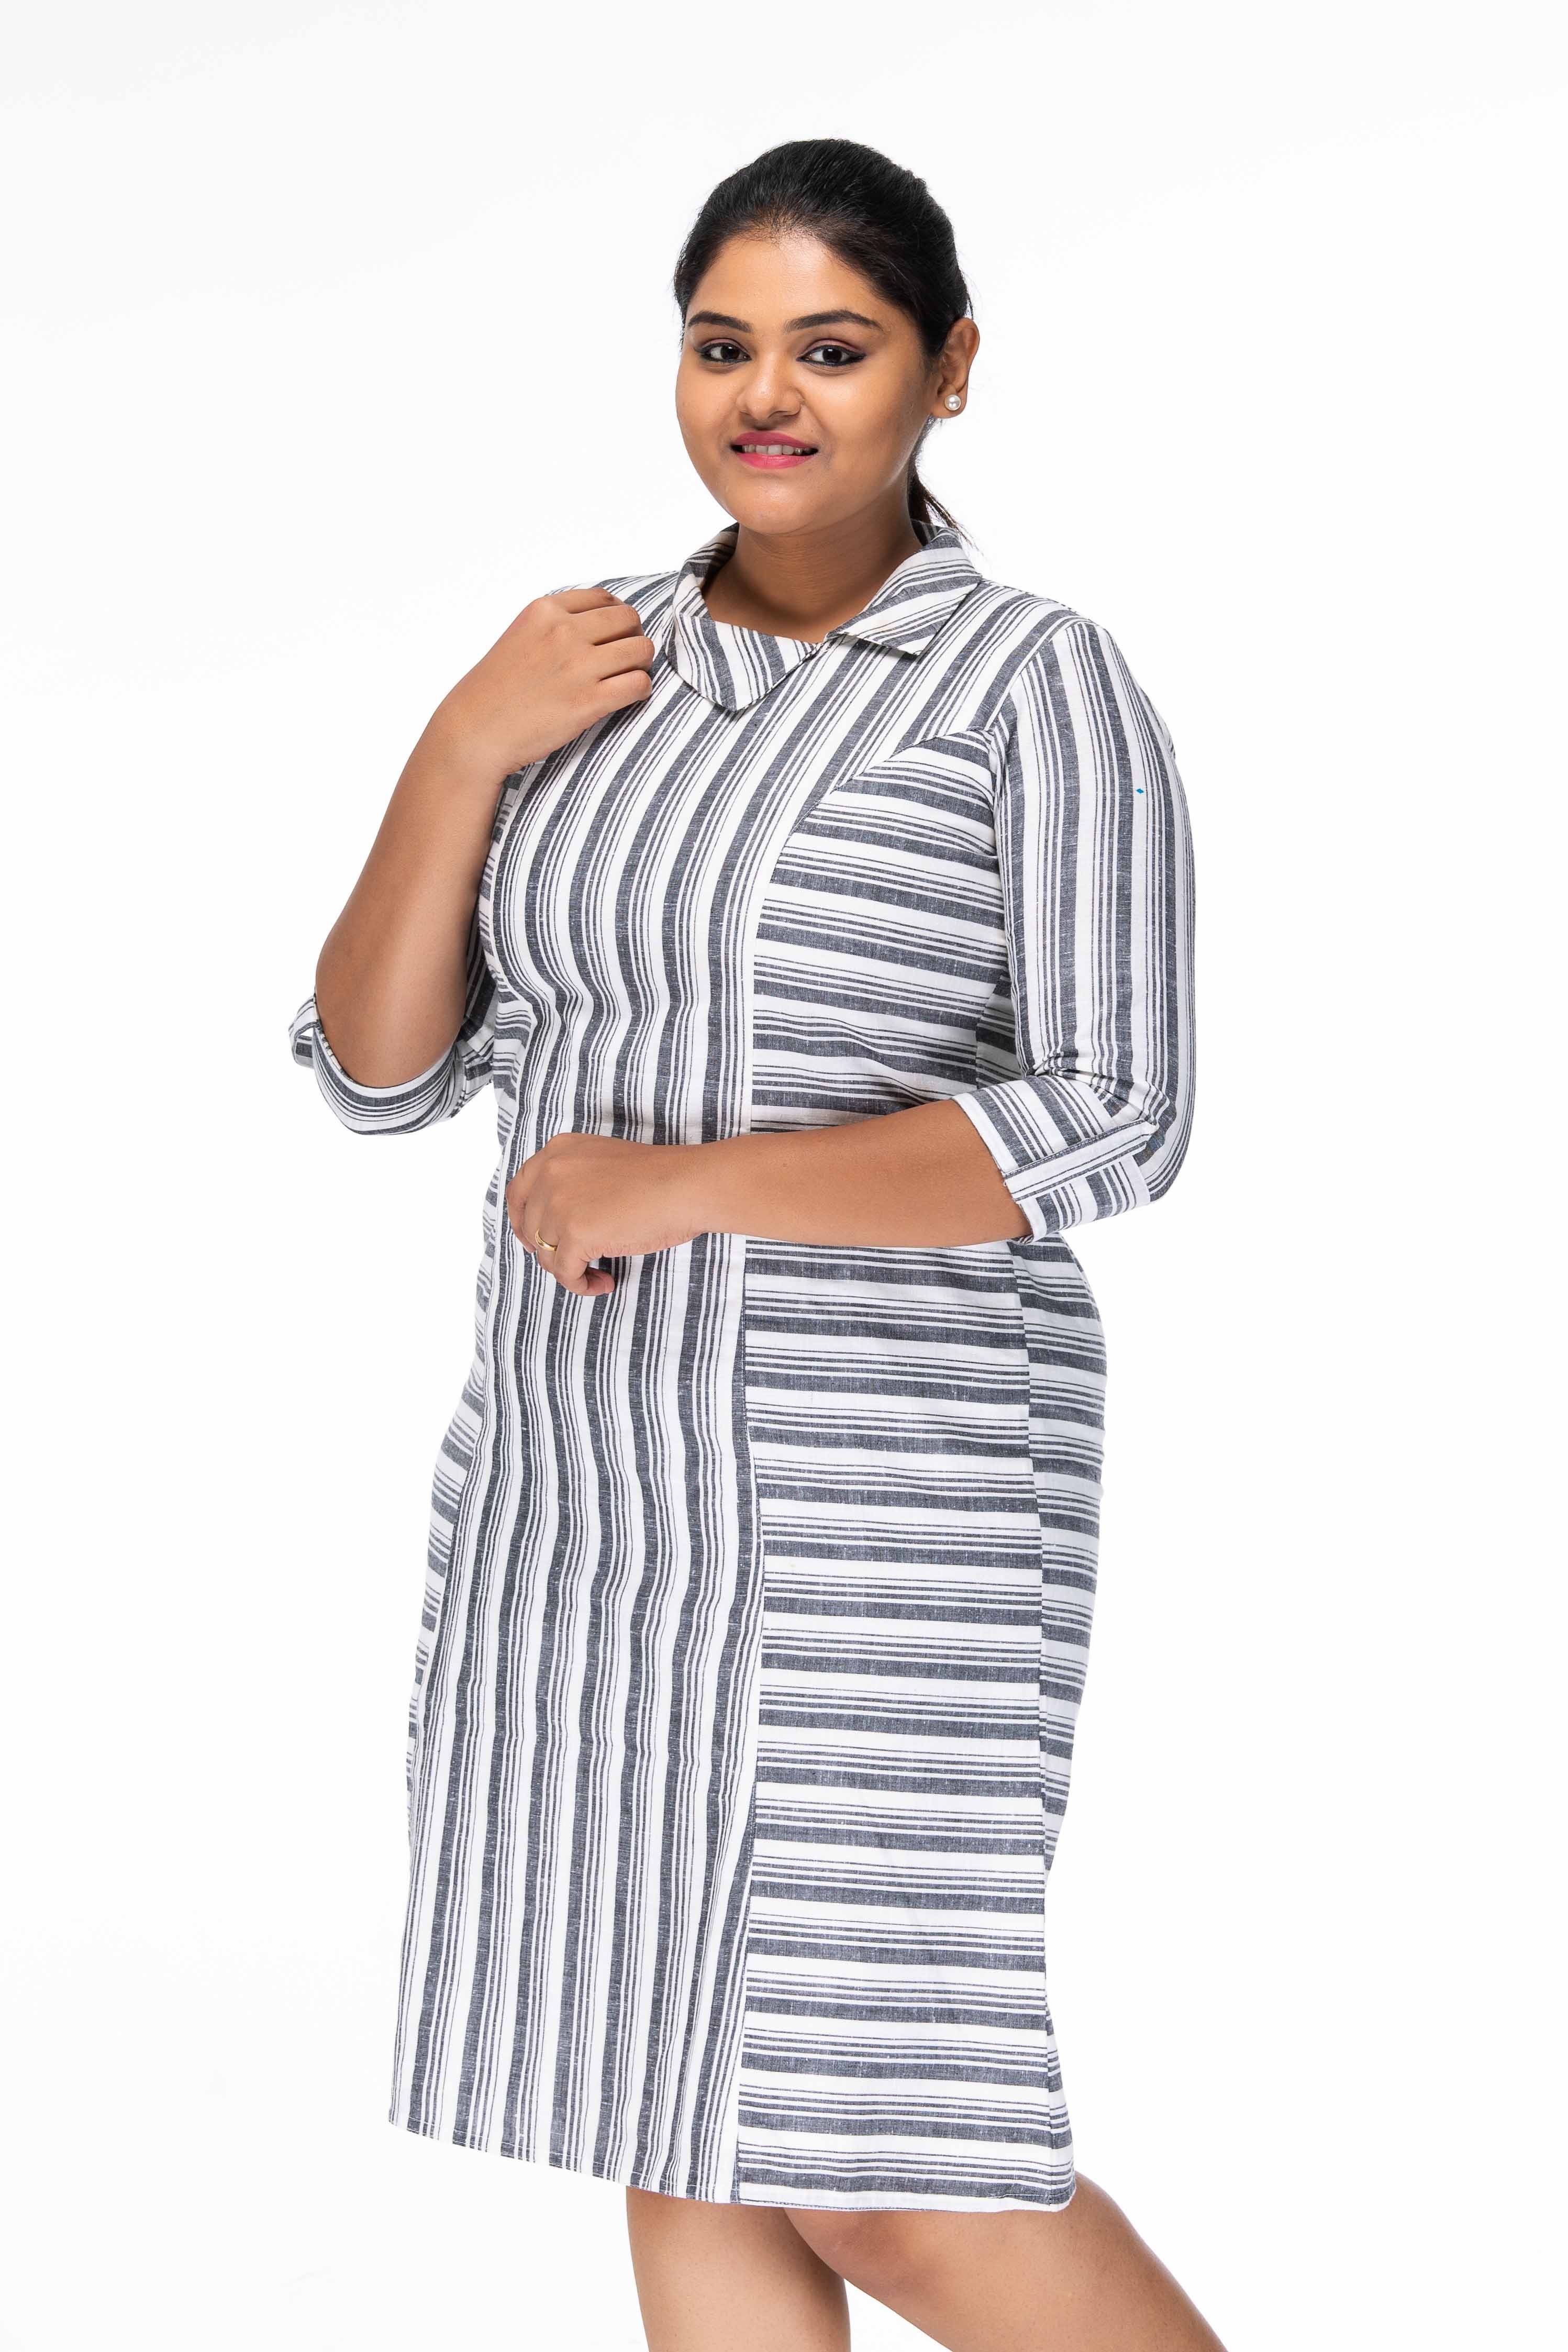 Pretty Striped Dress - Black and White Dress - Strapless Dress - $69.00 -  Lulus